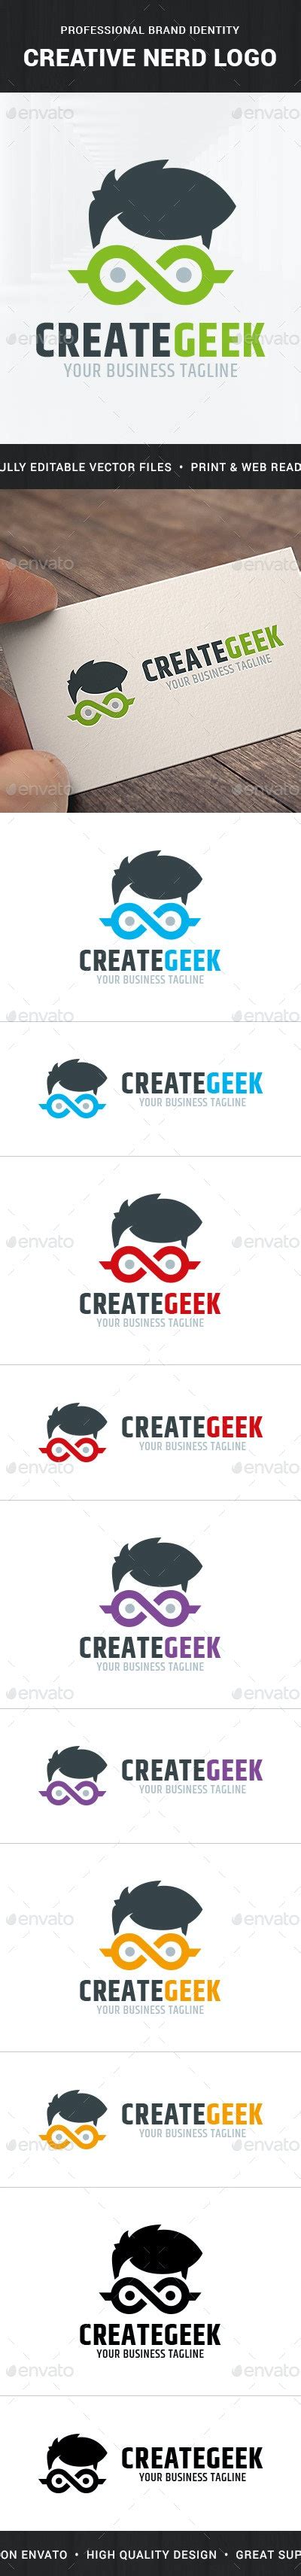 Creative Nerd Logo Template By Liveatthebbq Graphicriver